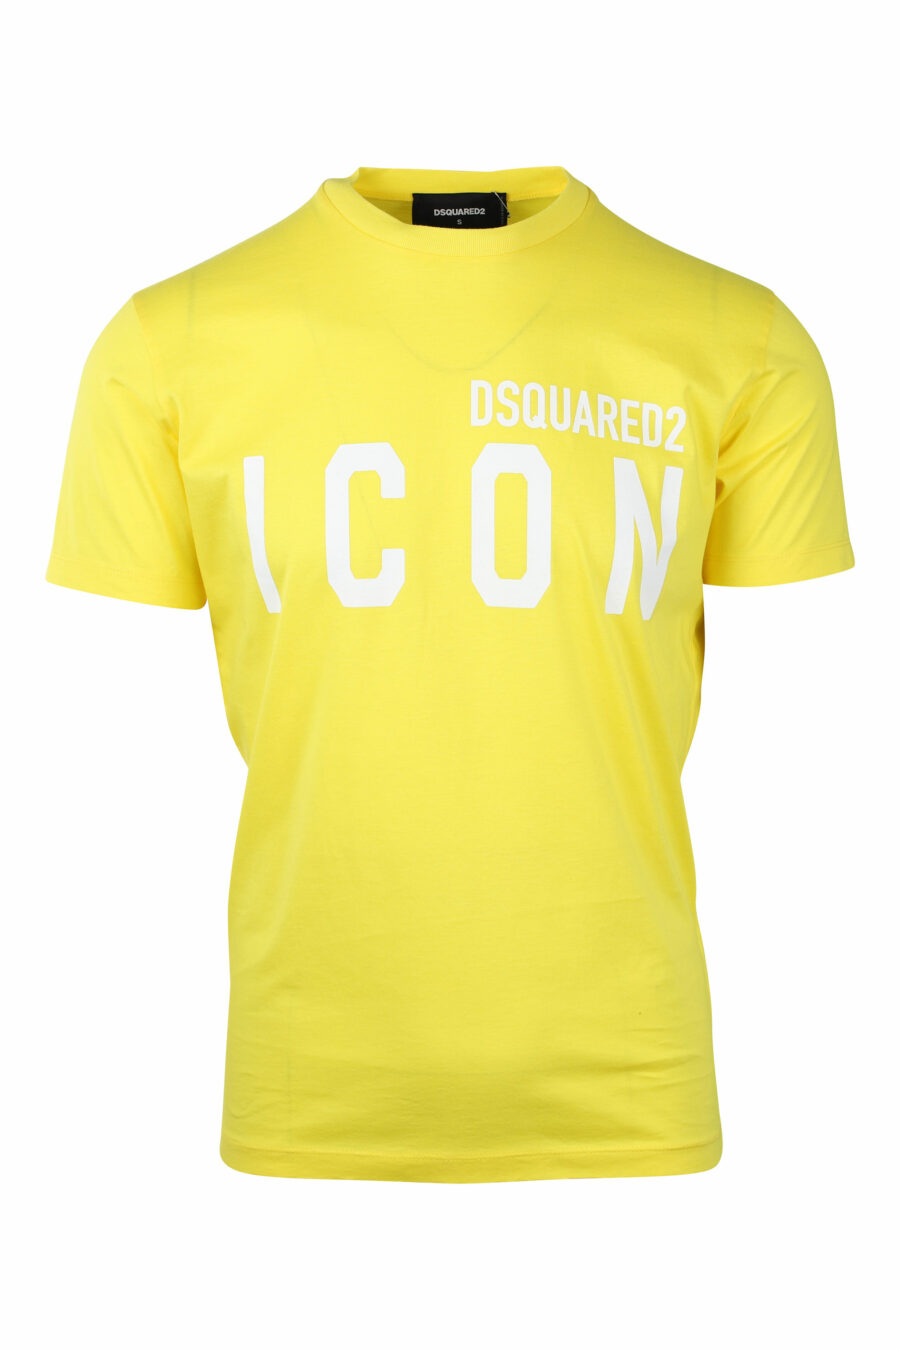 Camiseta amarilla con doble logo "icon" blanco - IMG 1404